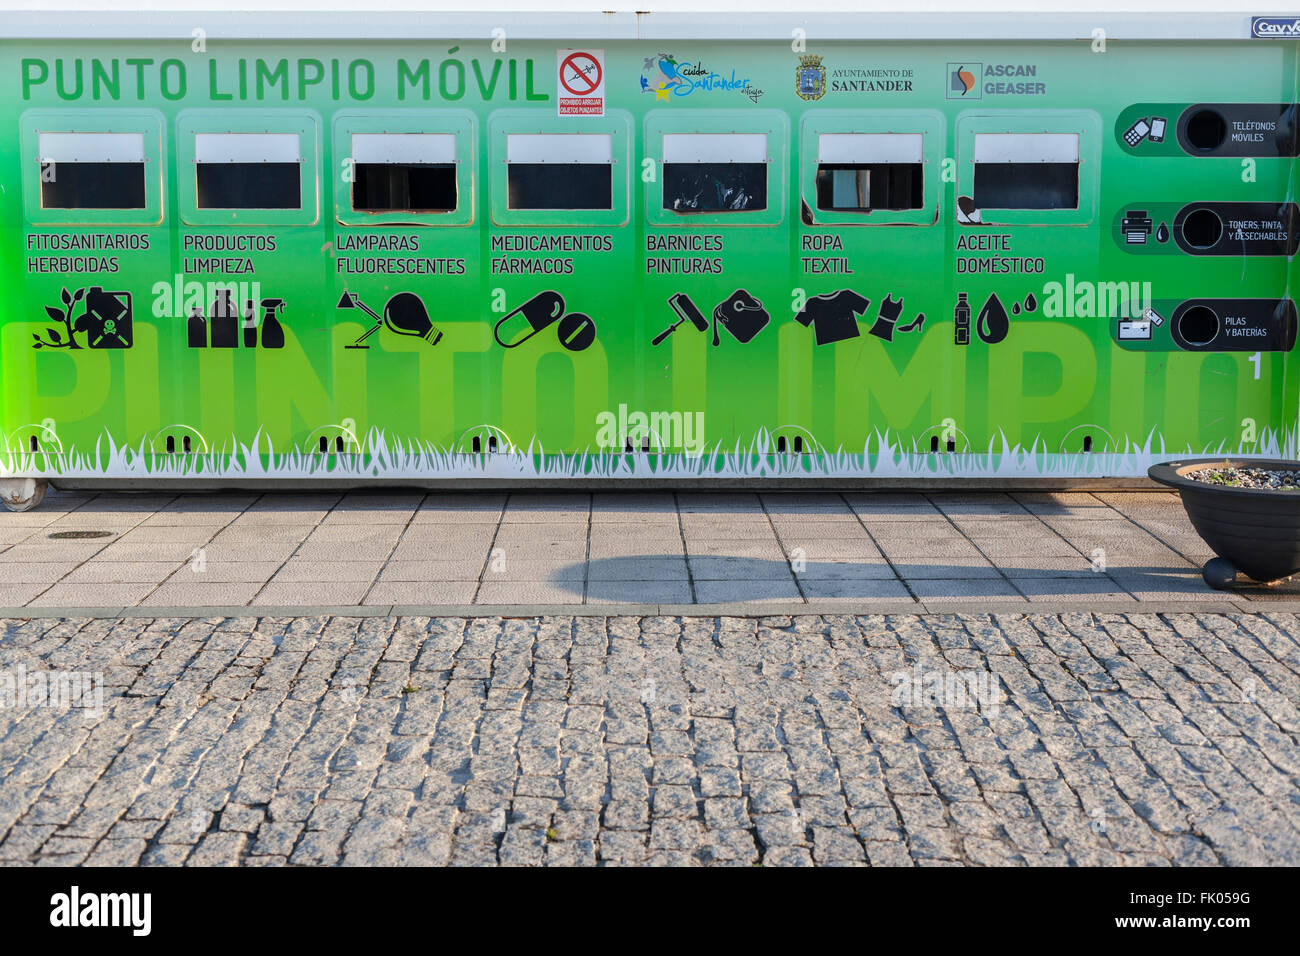 Punto limpio movil, recyclage. Santander, Espagne. Banque D'Images